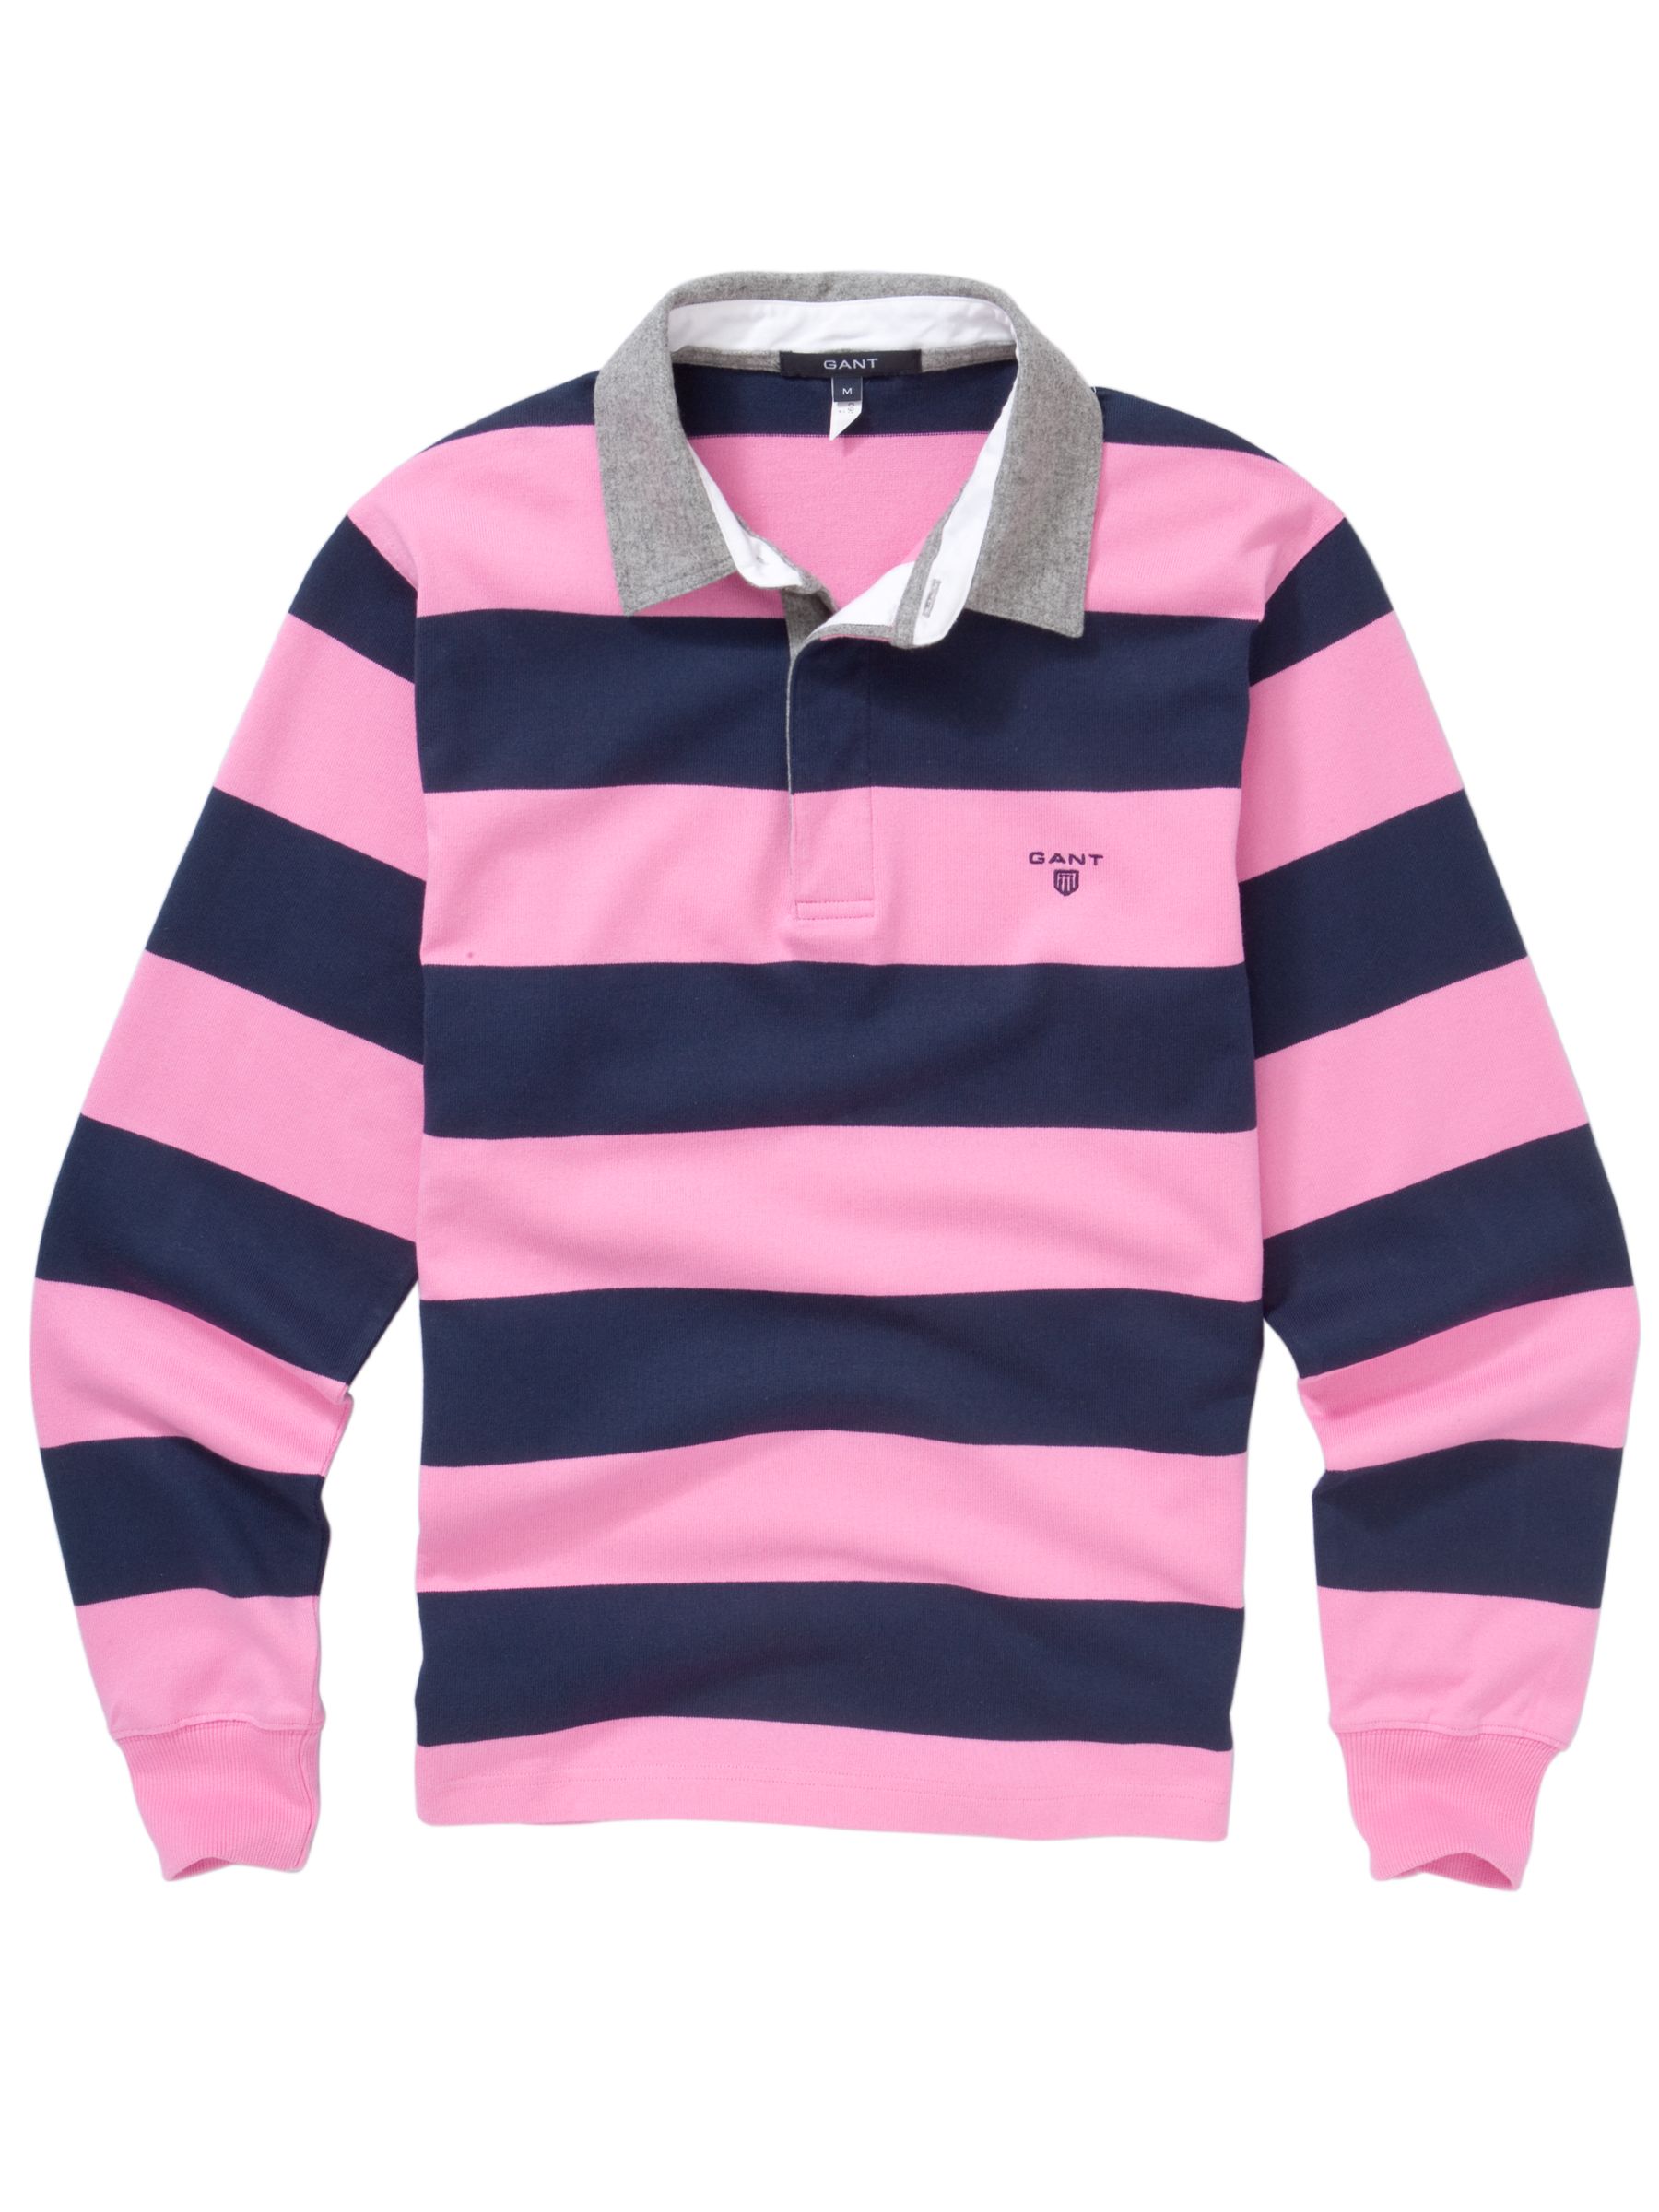 Georgetown Bar Stripe Rugby Shirt, Pink/Navy